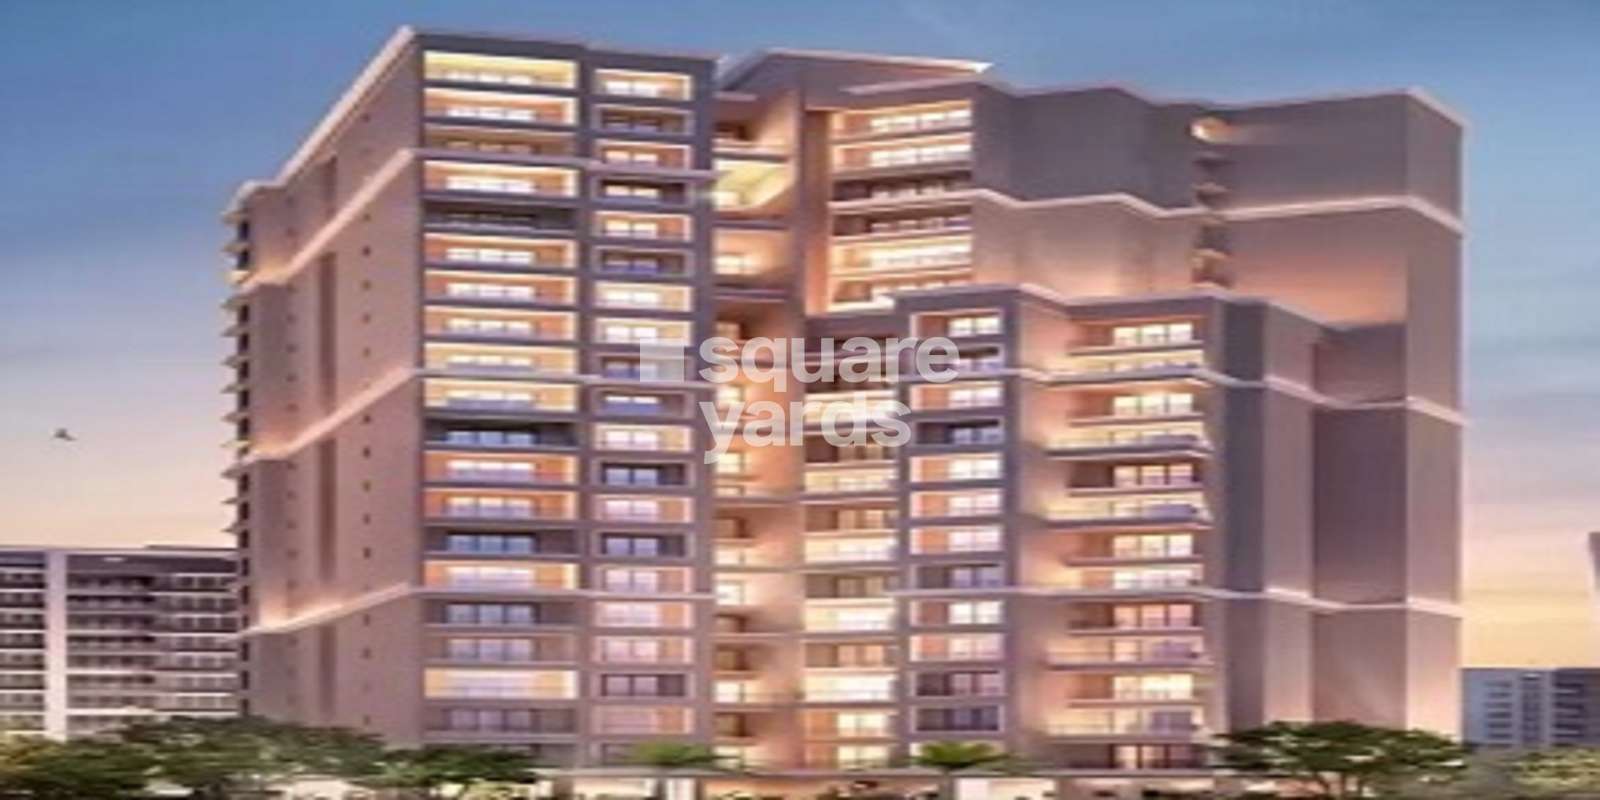 Ashapura Rameshwar Apartment Cover Image